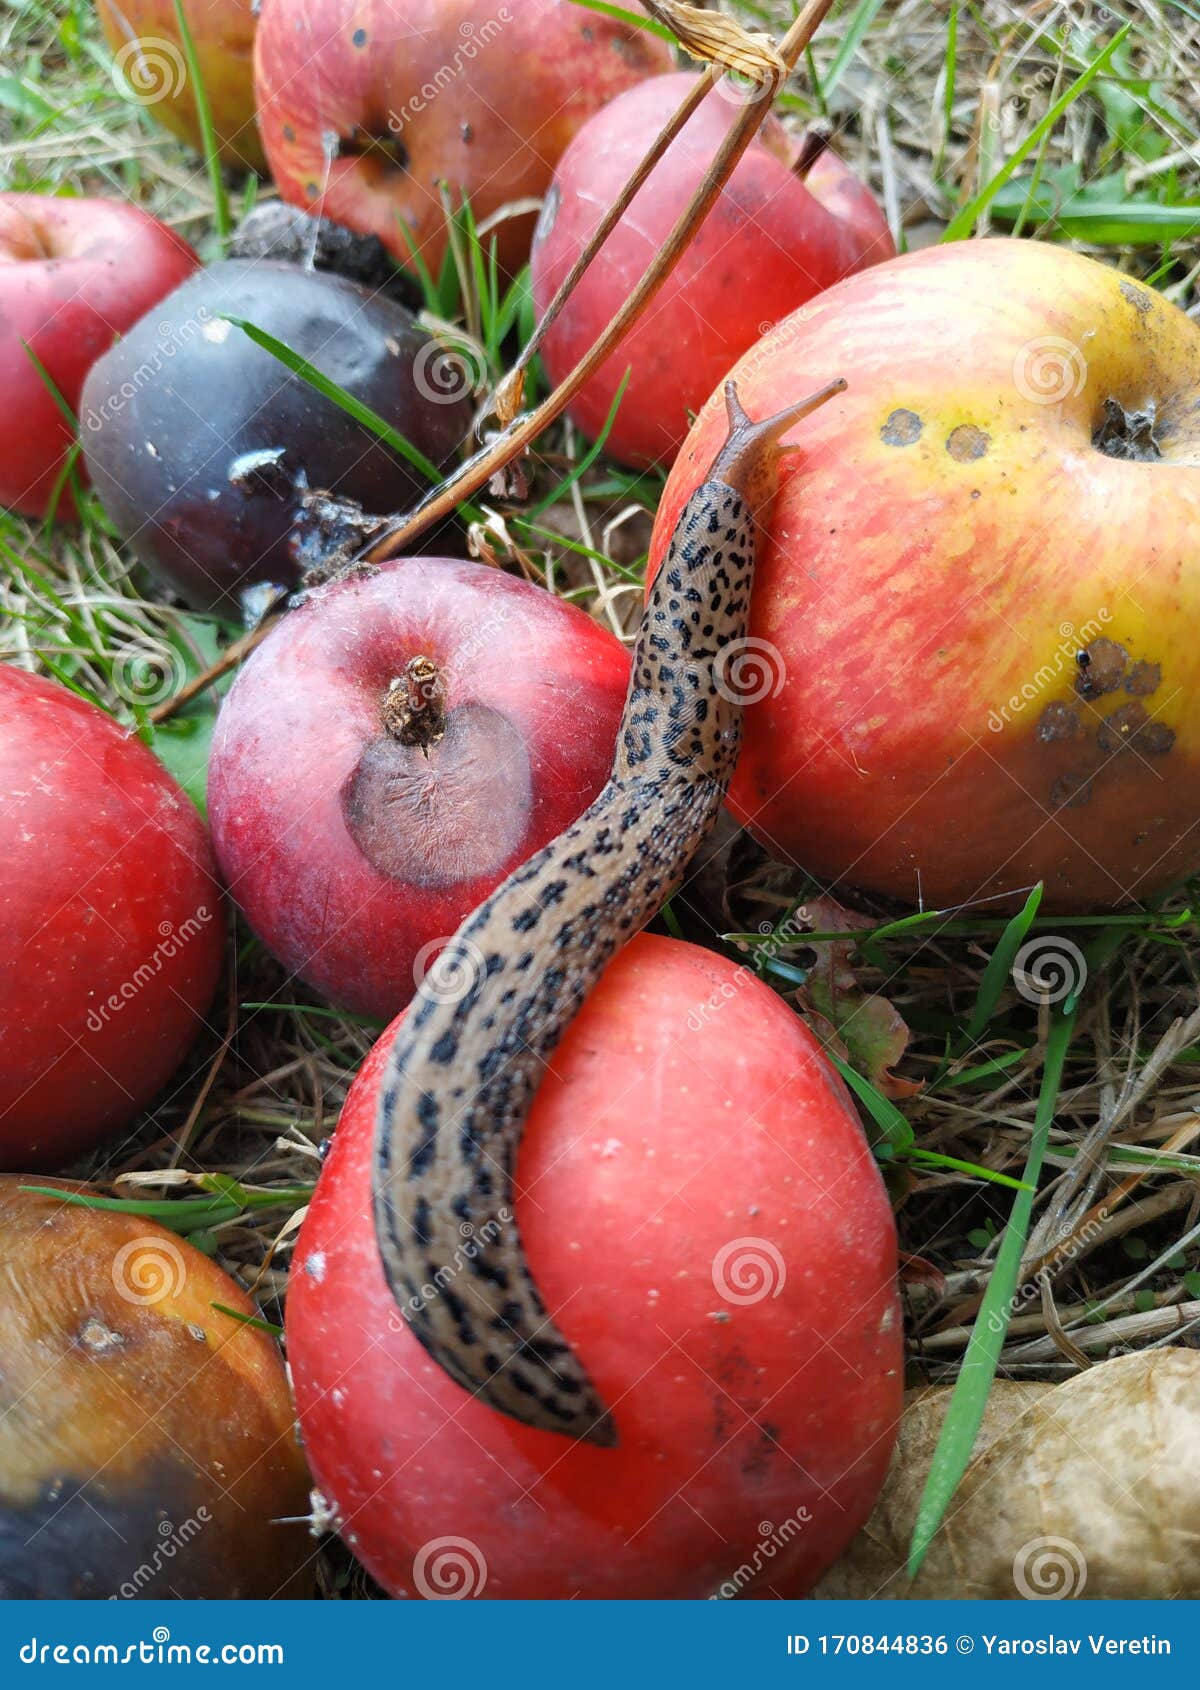 slug crawling on apples at summer day